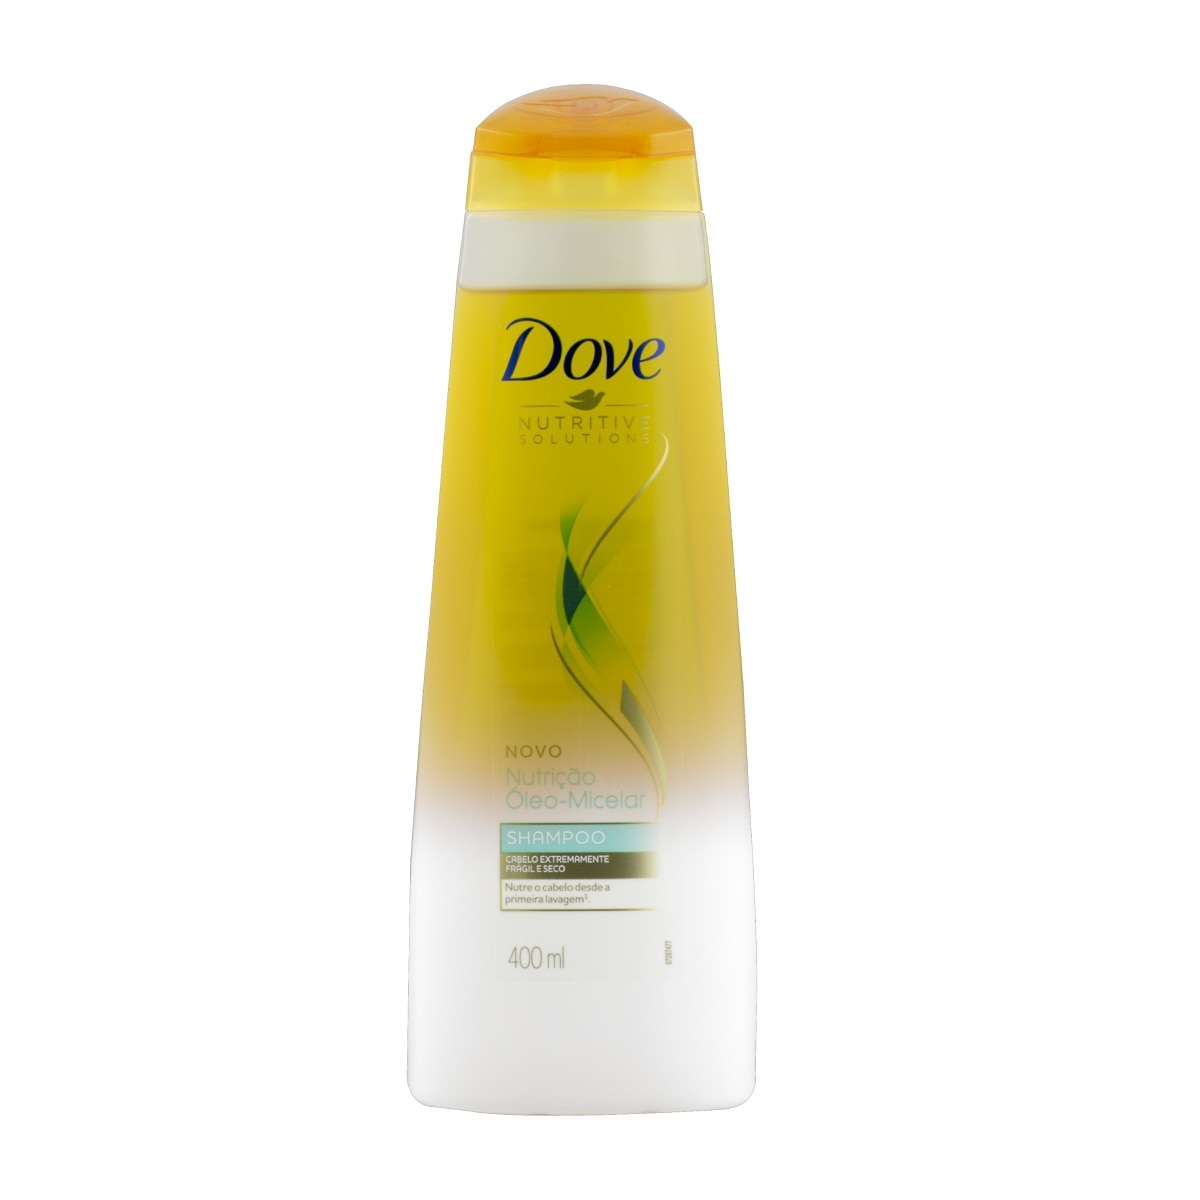 Shampoo Dove Nutricao Oleo-Micelar 400ml